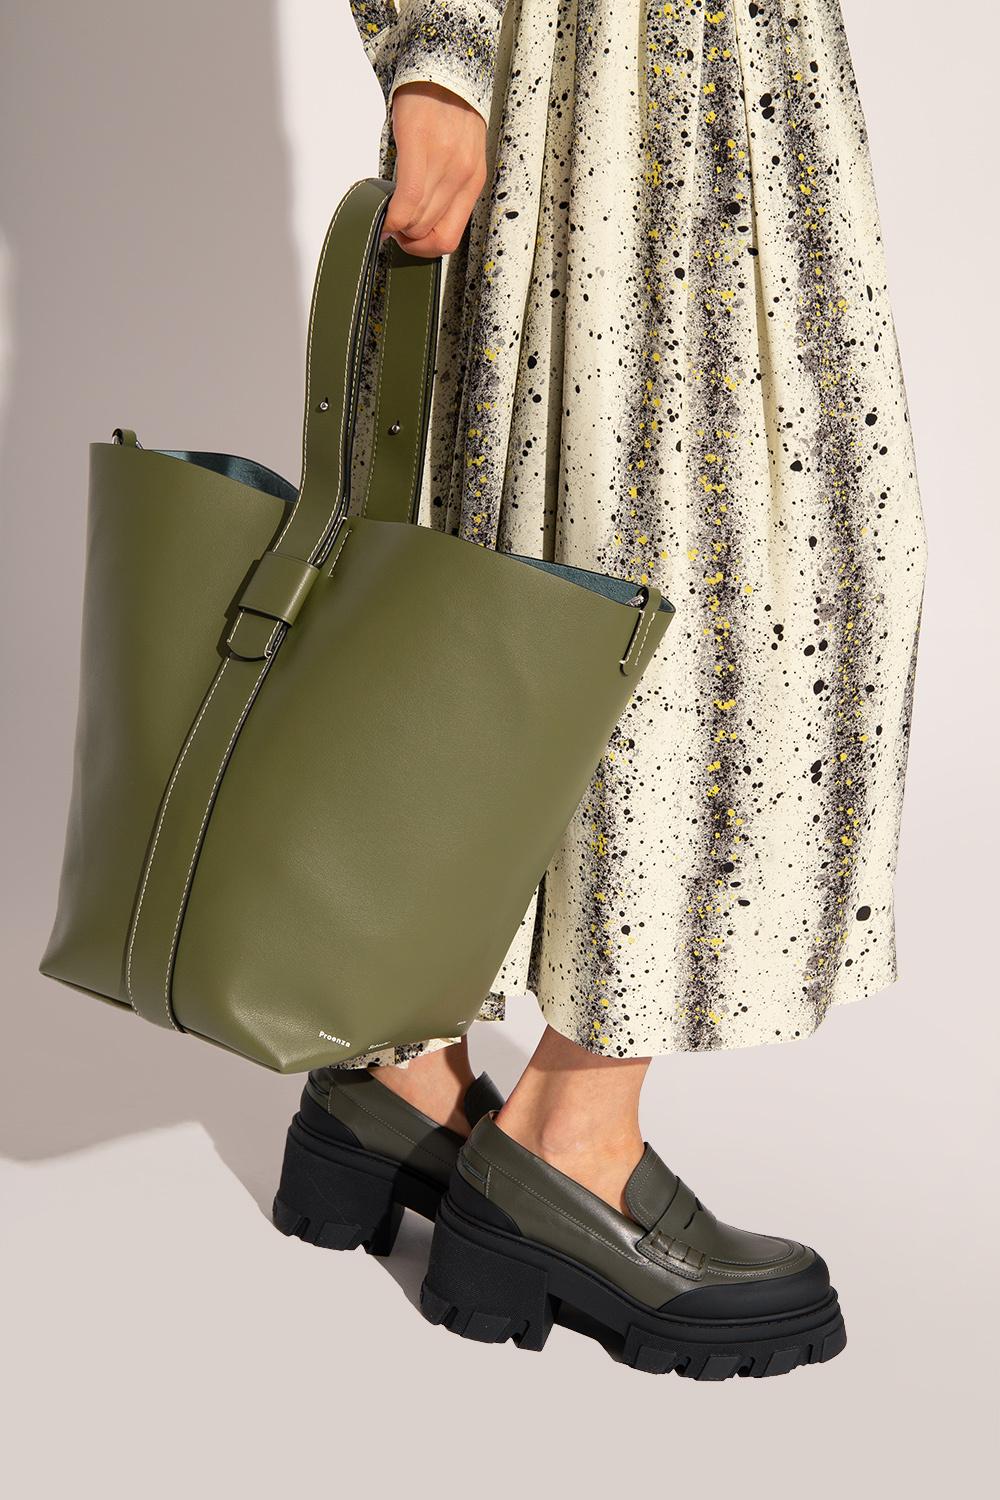 PROENZA SCHOULER WHITE LABEL 'sullivan' Leather Shoulder Bag in Green | Lyst